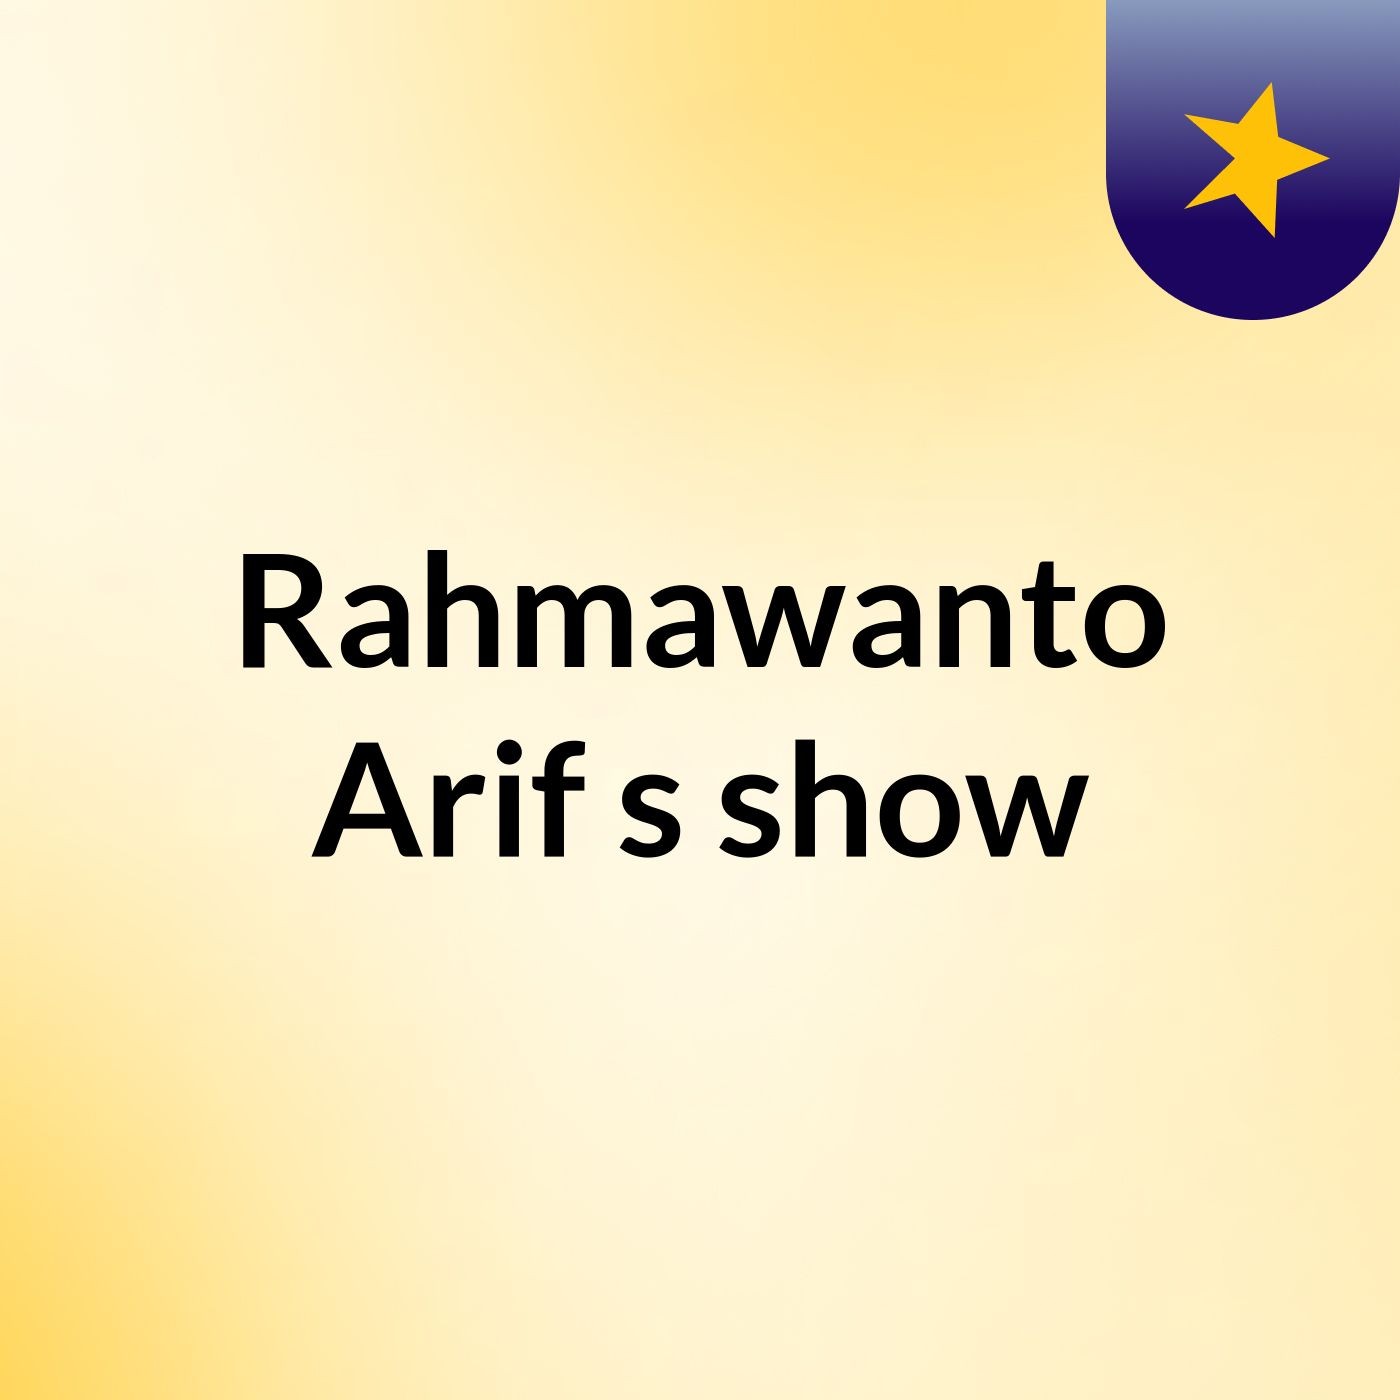 Rahmawanto Arif's show